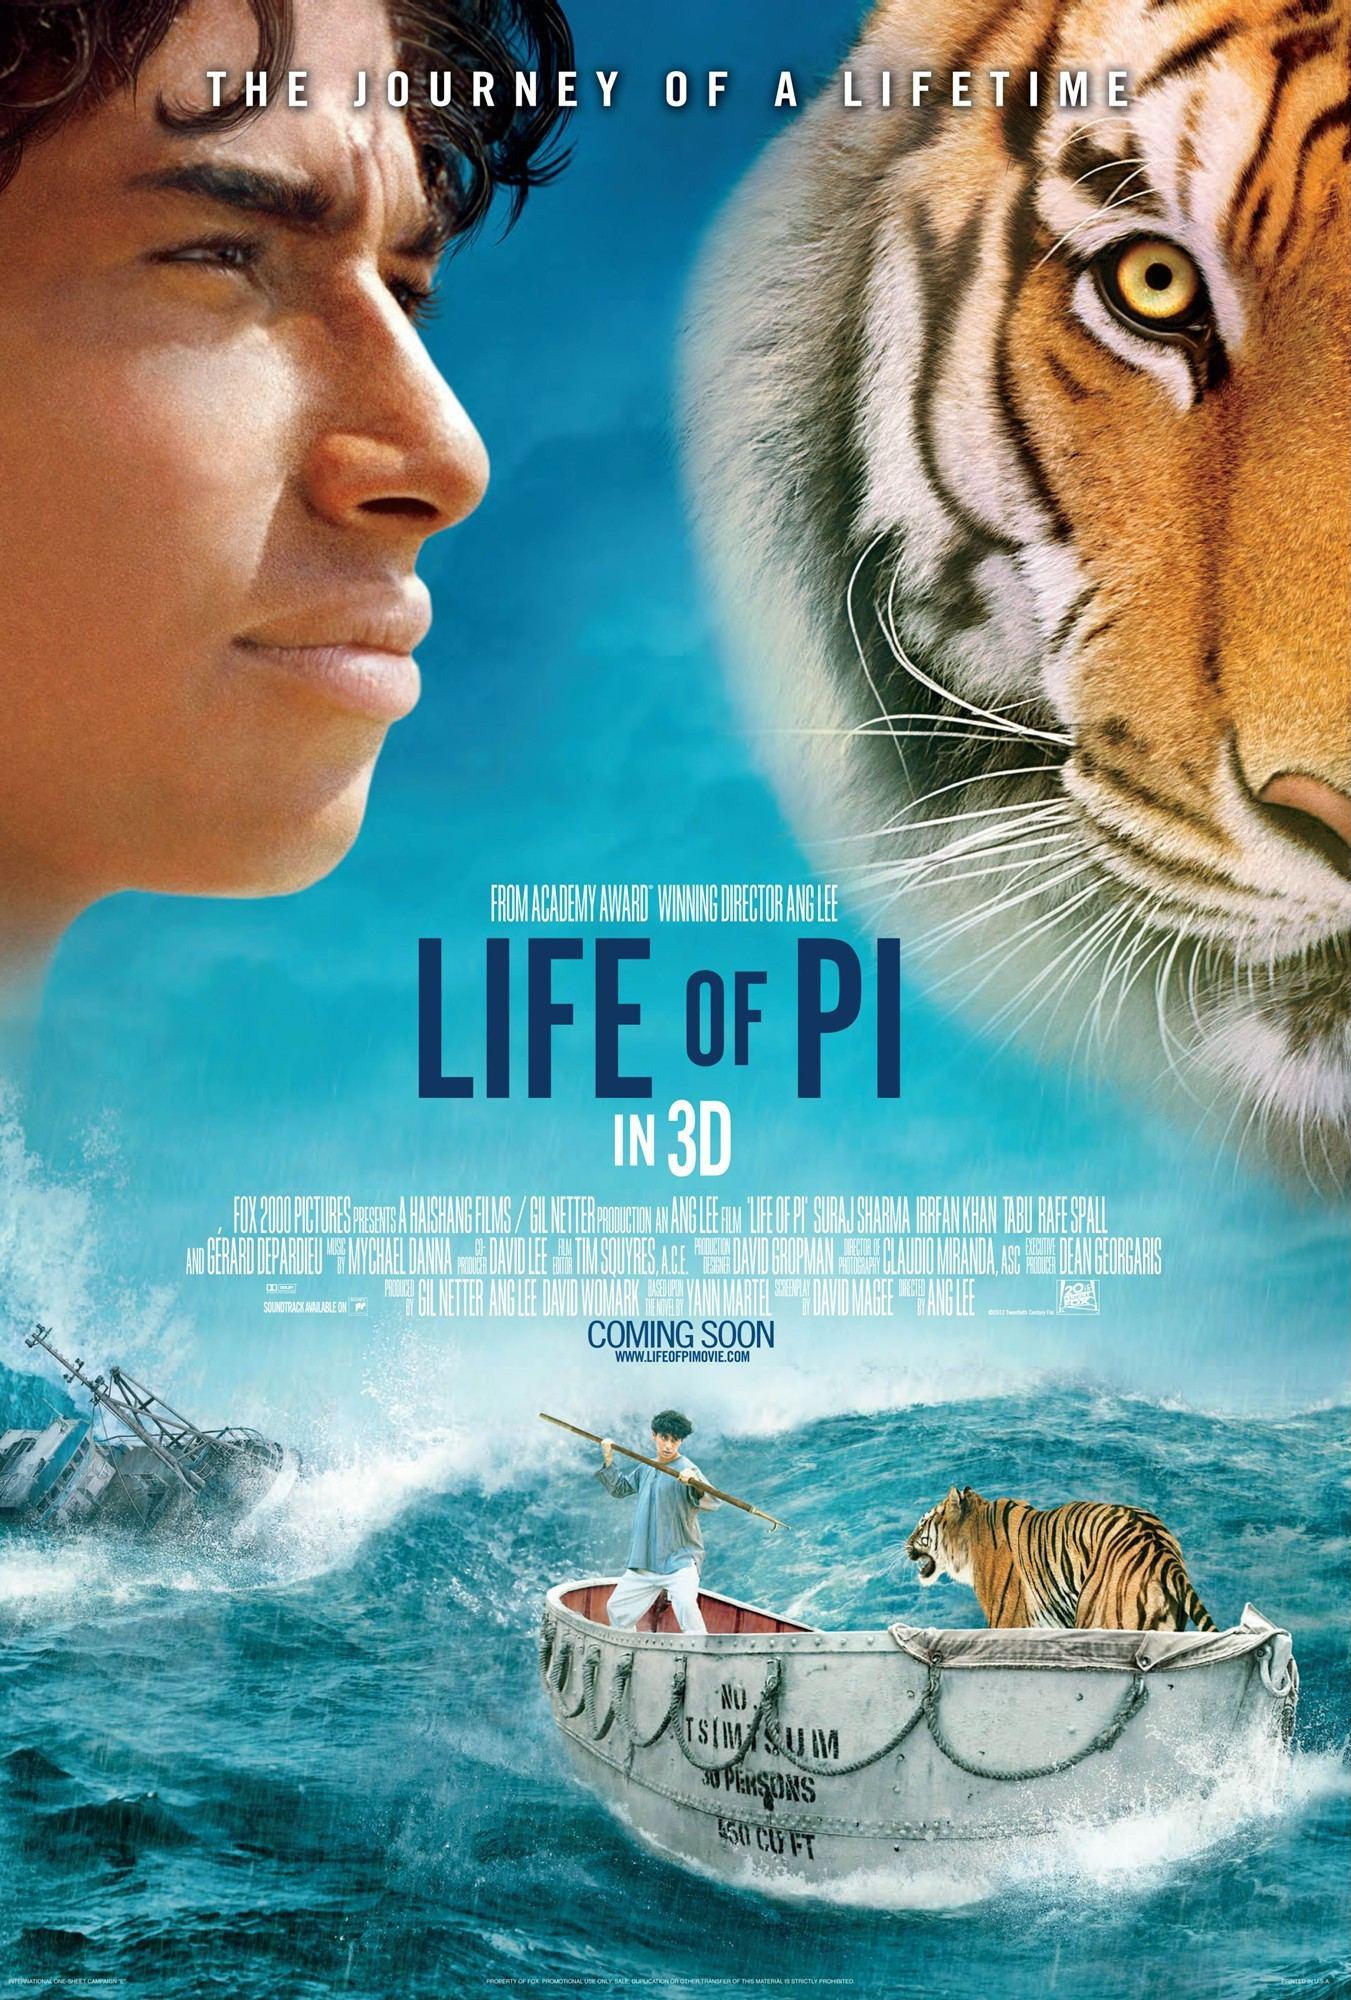 Life Of Pi wallpaper, Movie, HQ Life Of Pi pictureK Wallpaper